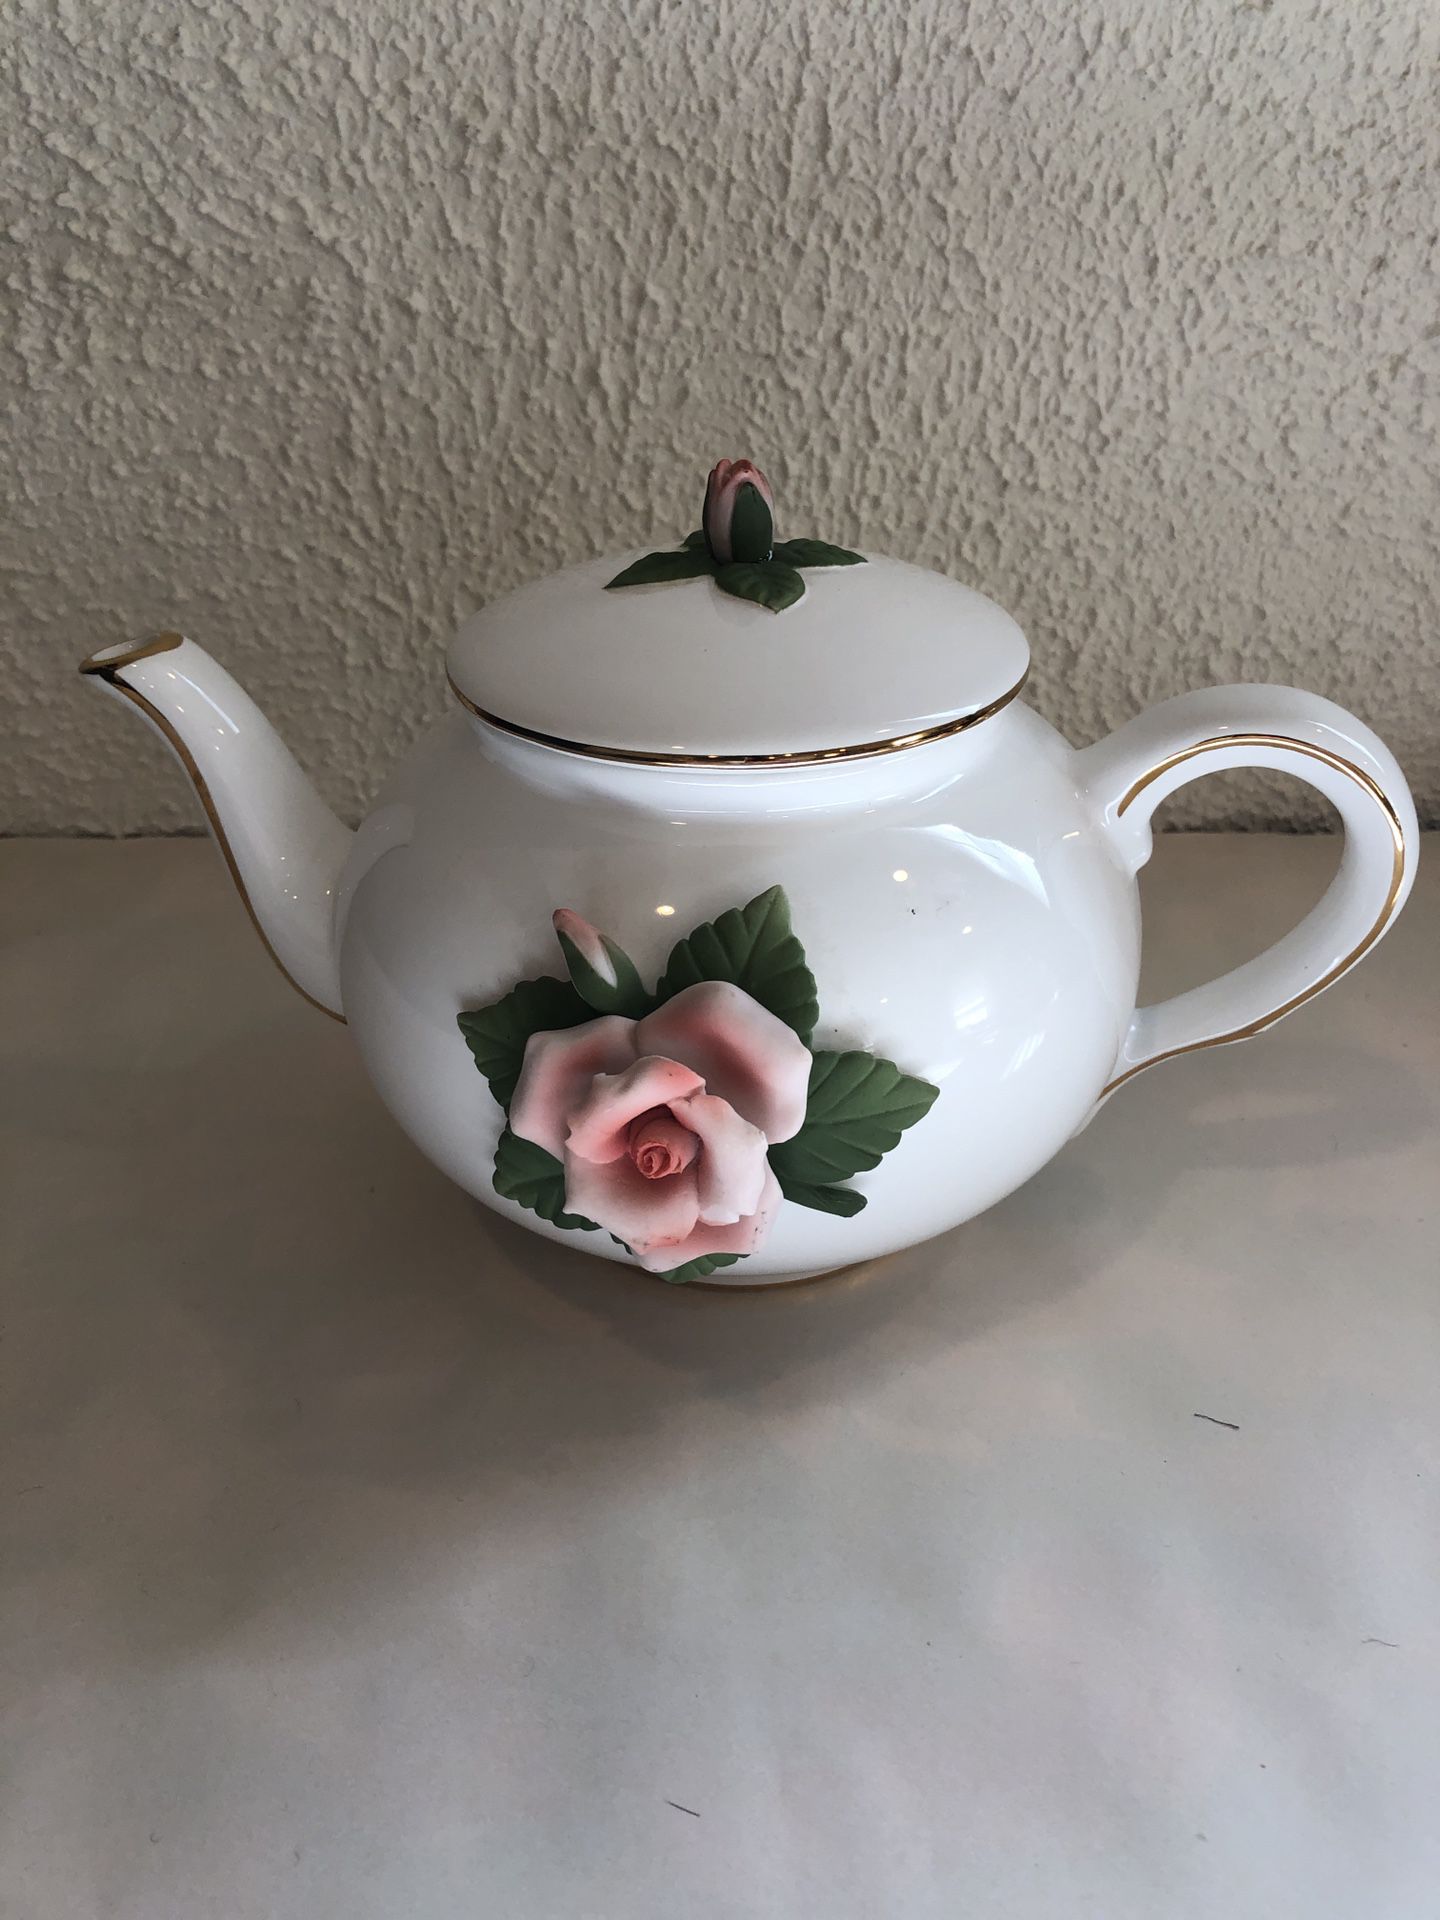 Teleflora Gift Porcelain Tea Pot With 3 D Rose Flower And Gold Trim